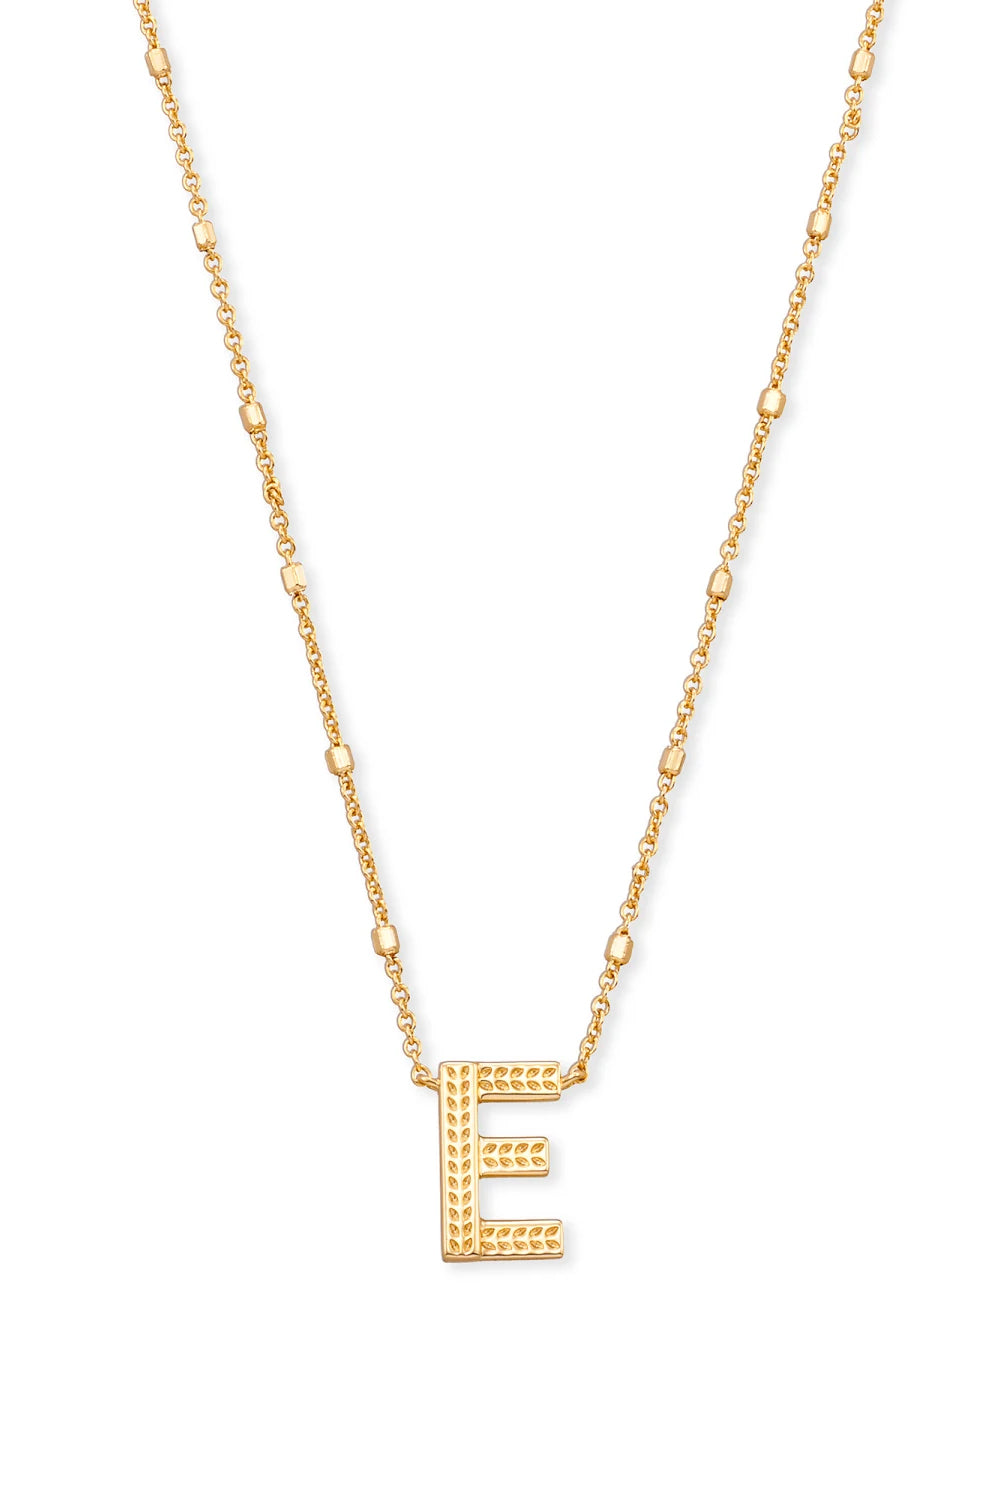 Kendra Scott 251735 Womens Elisa Gunmetal Black DRUSY Pendant Necklace for  sale online | eBay